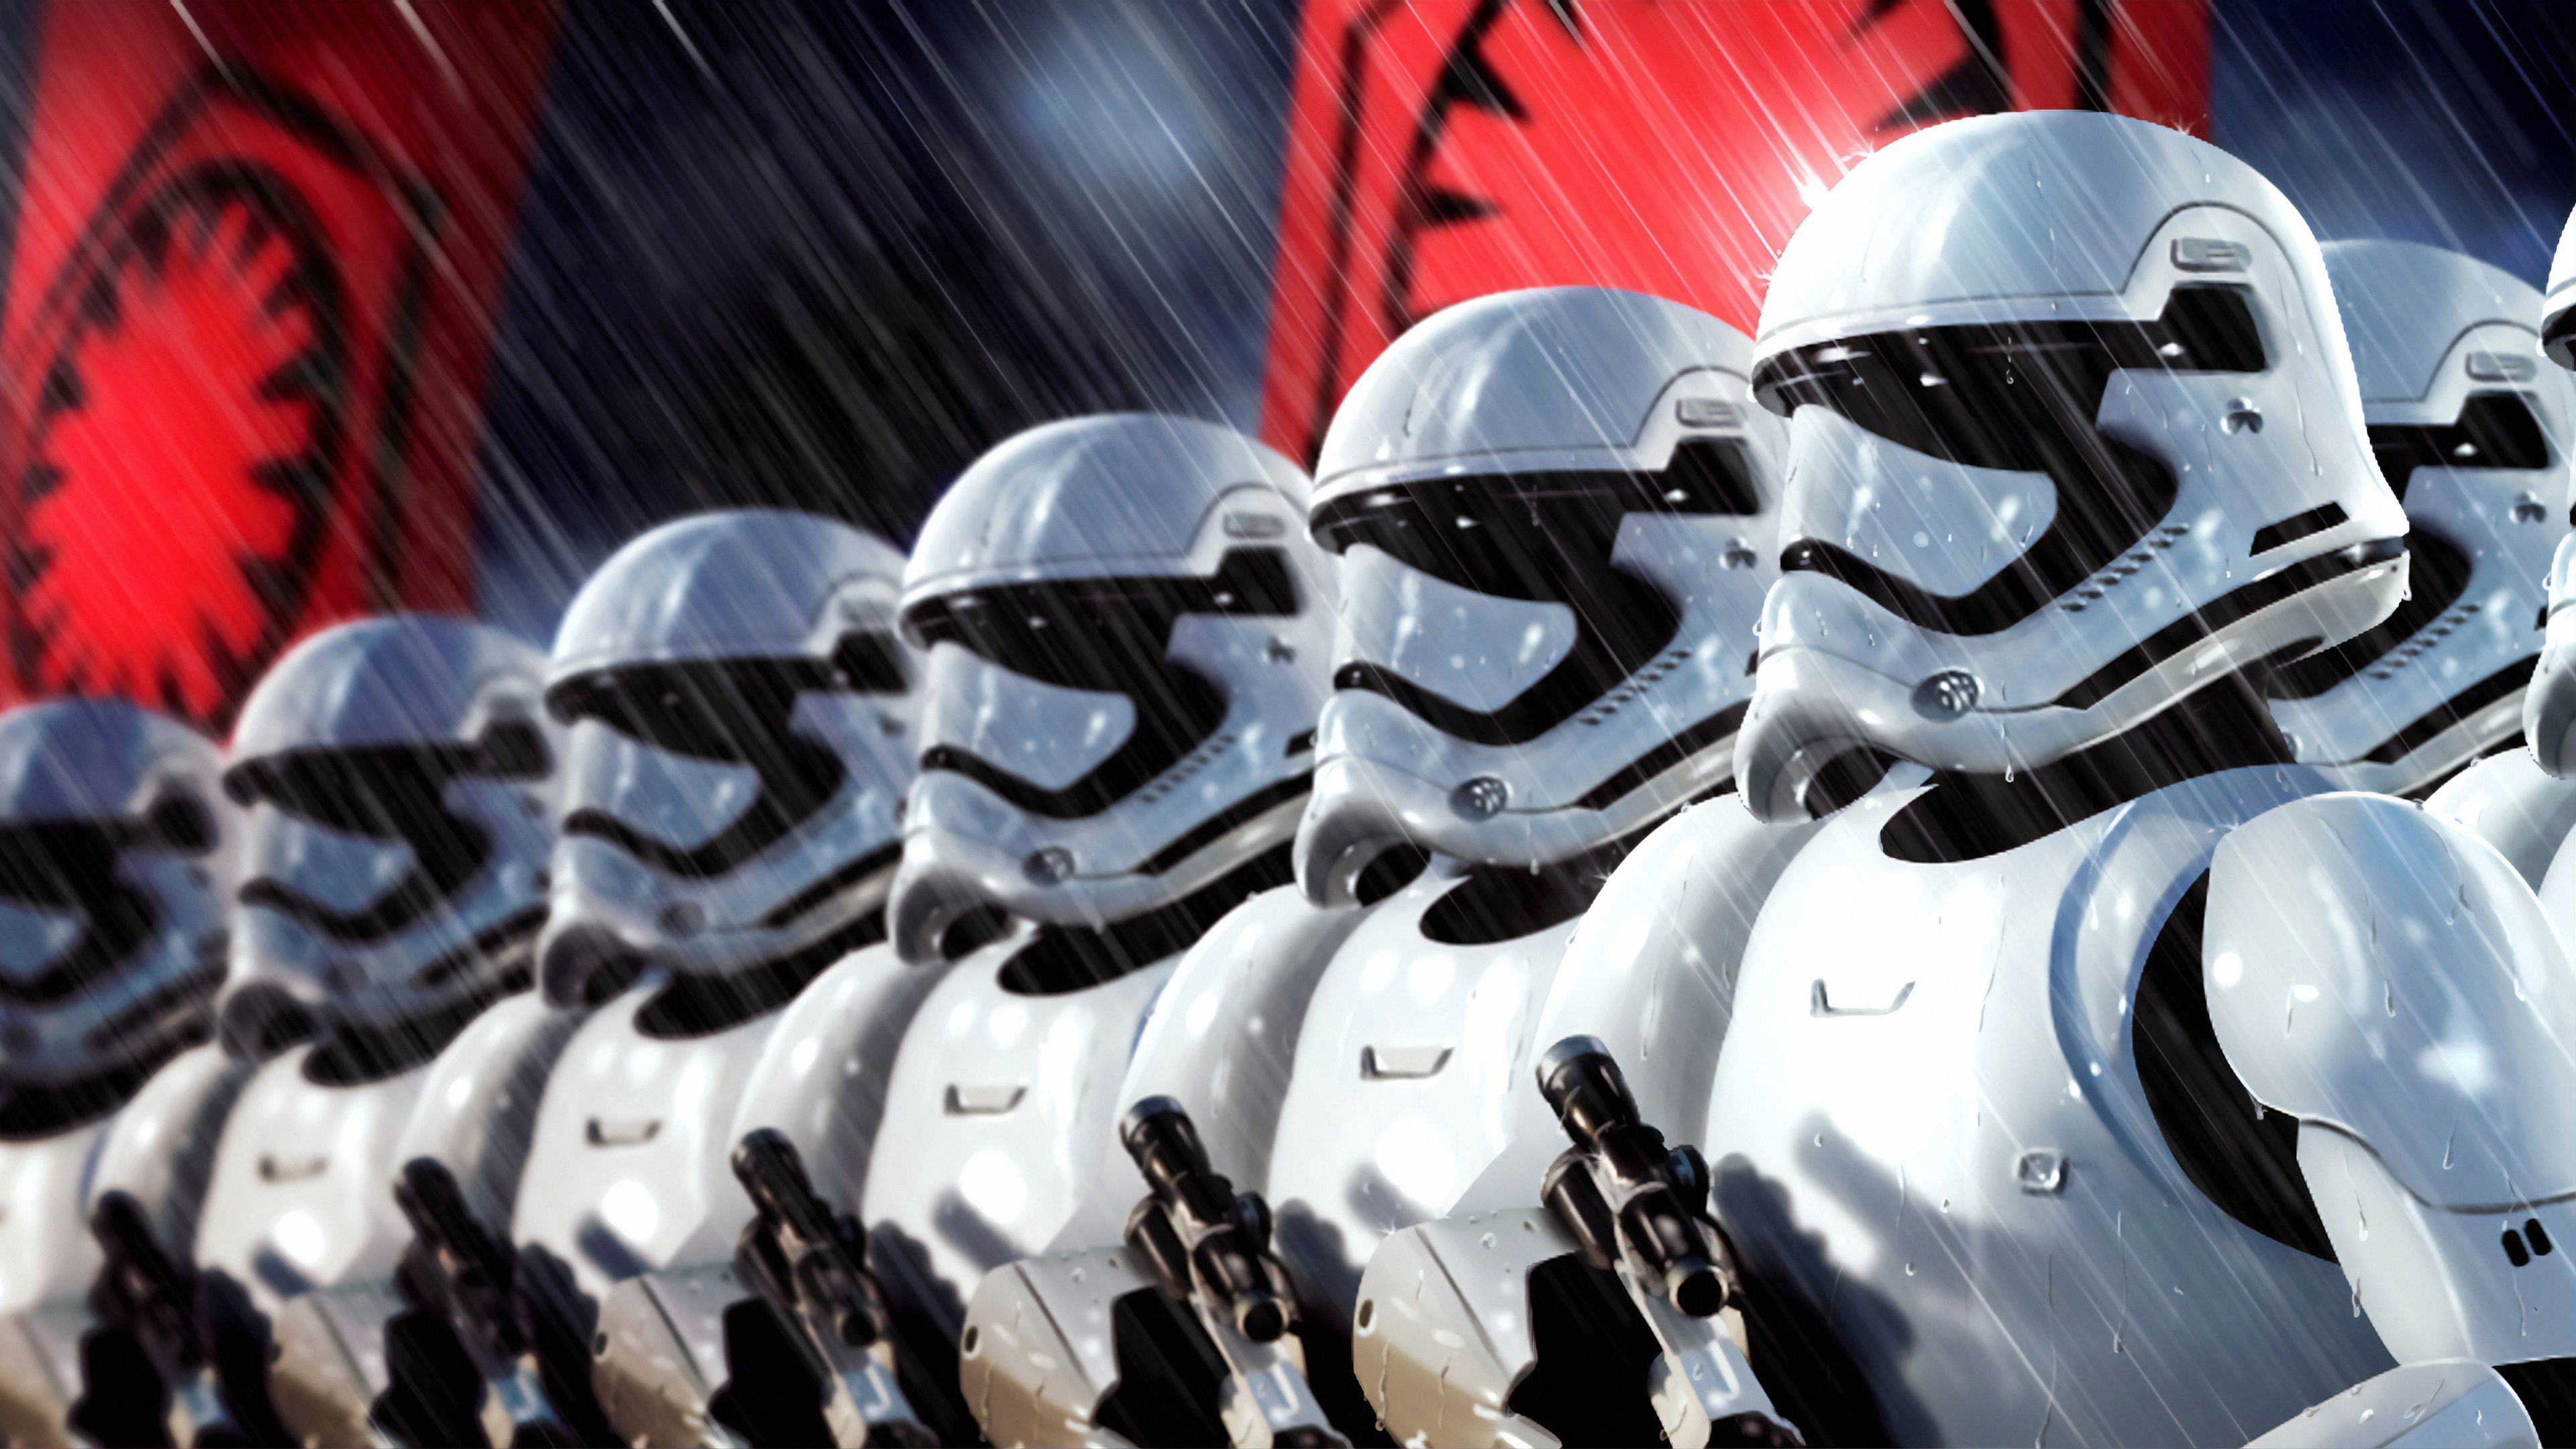 stormtrooper wallpaper hd